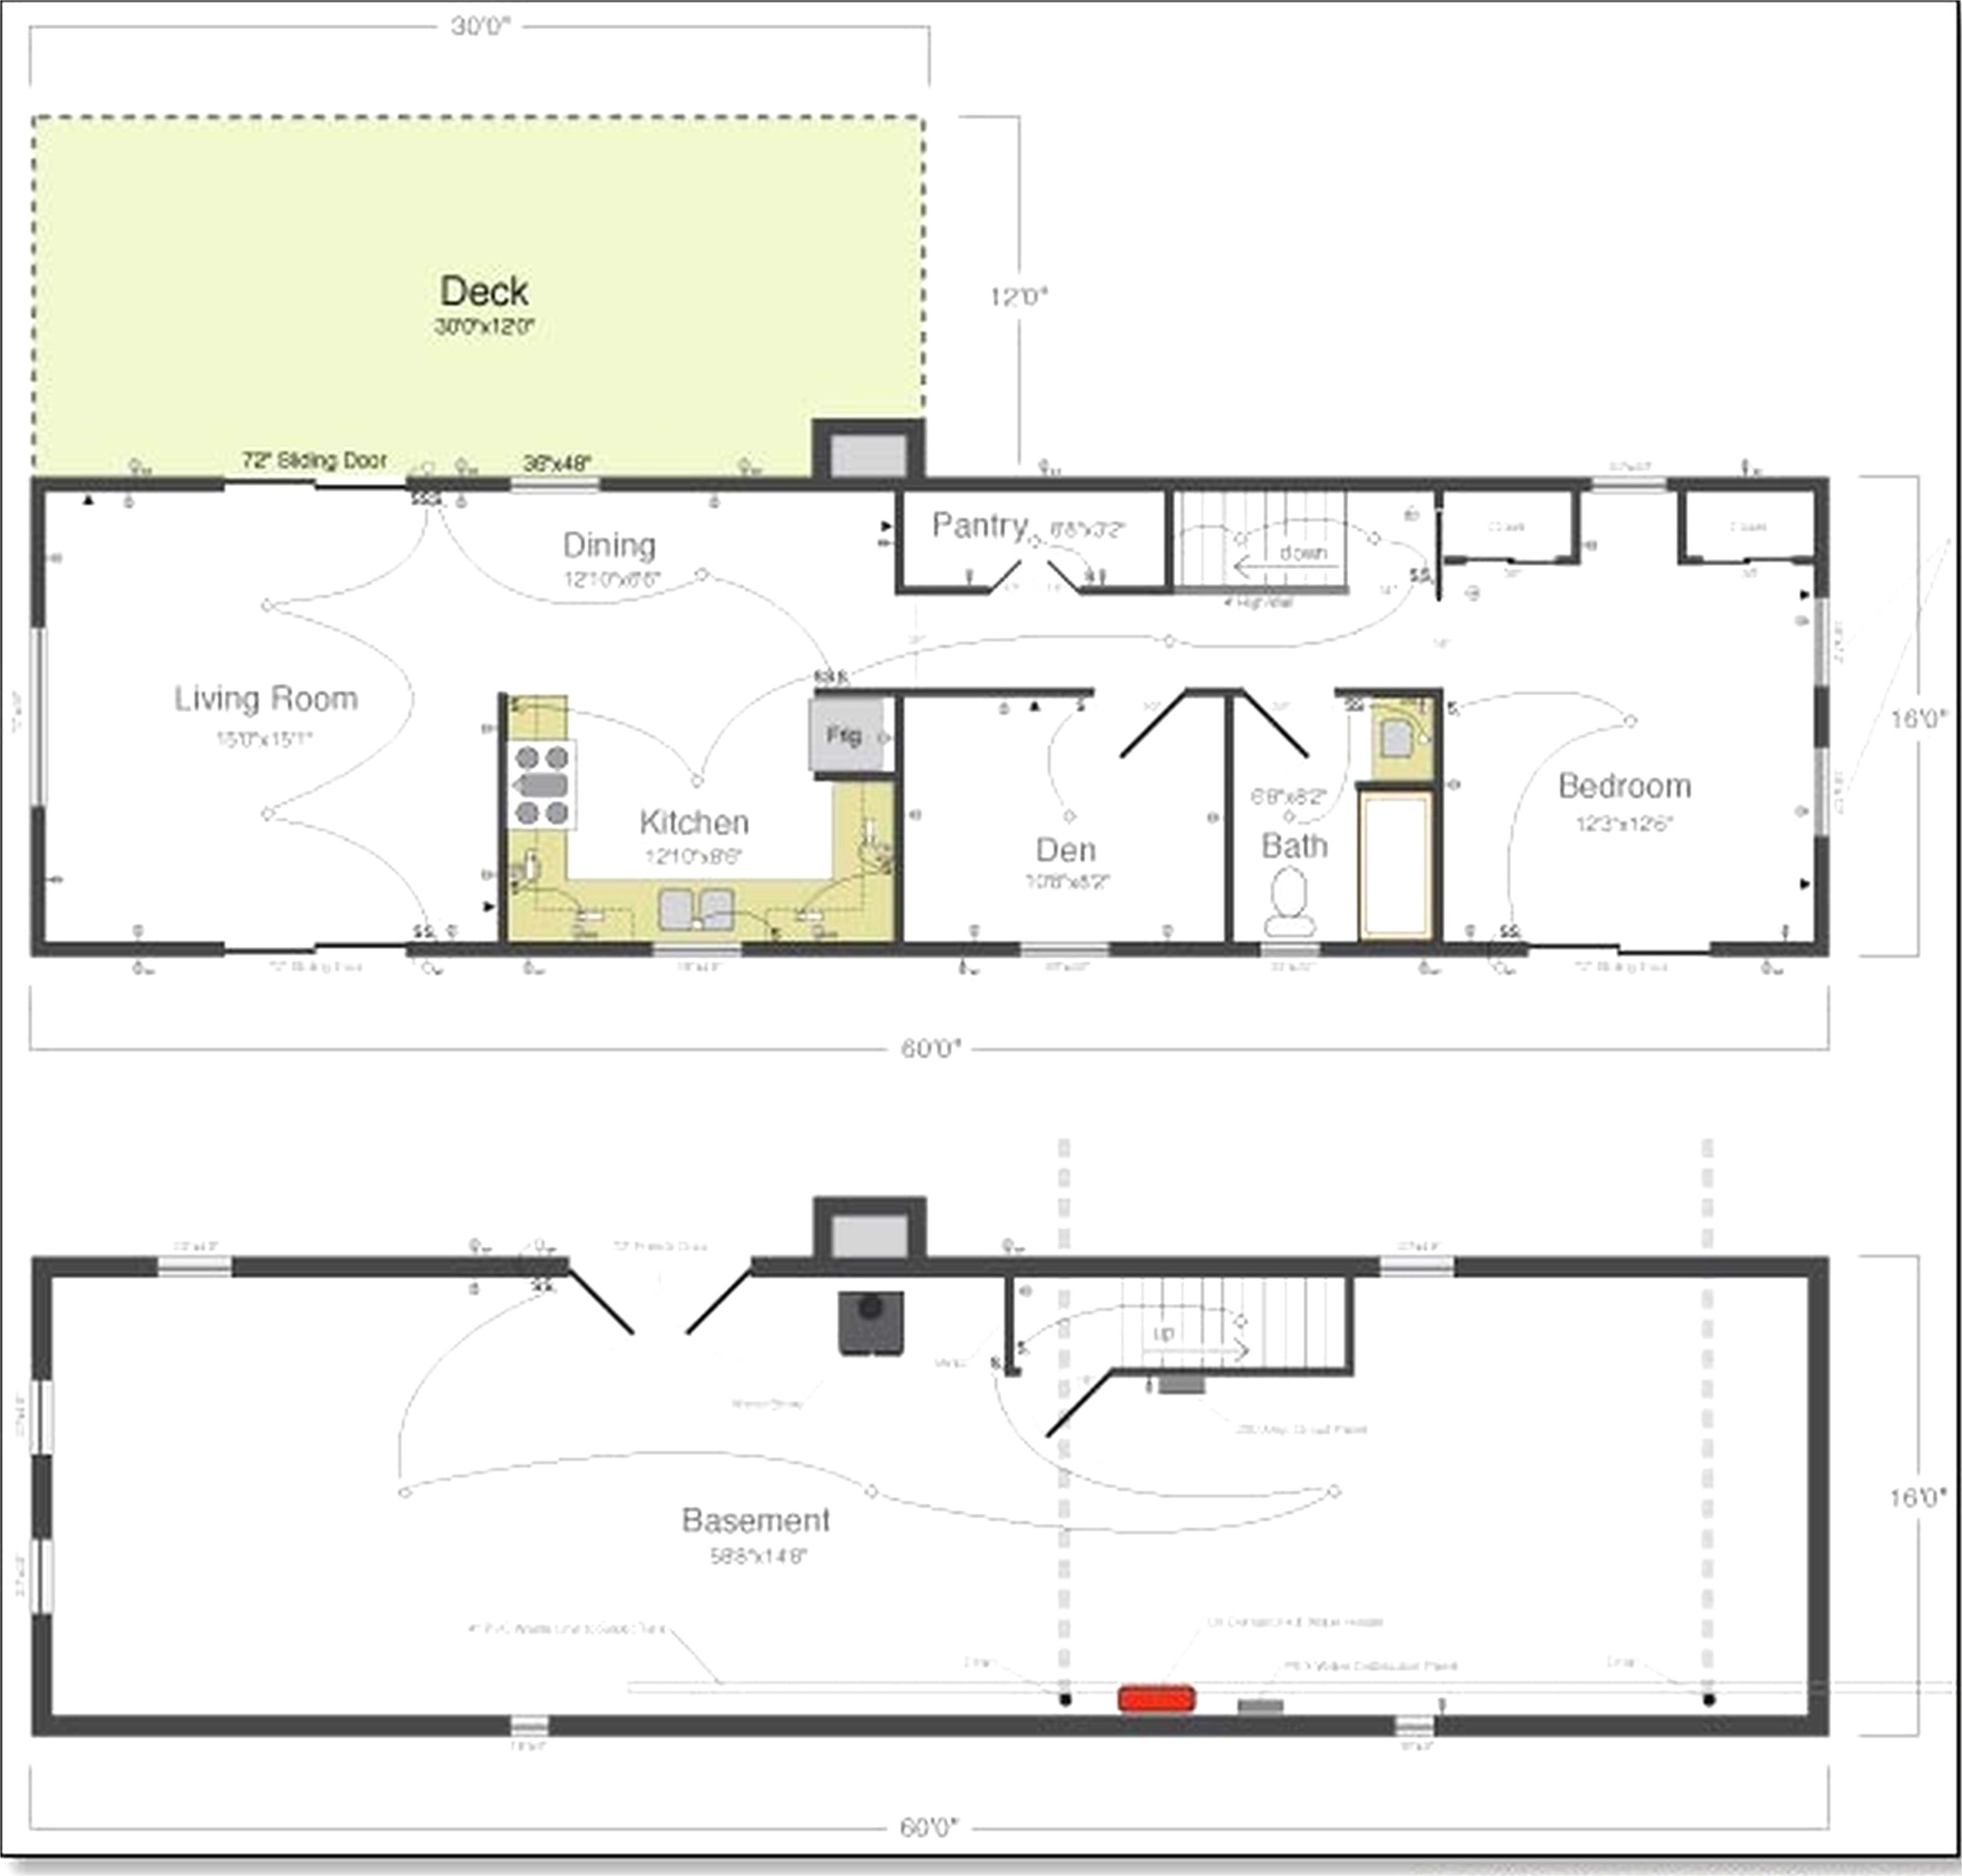 32x32 house plans or breathtaking mini house plans s best inspiration home design